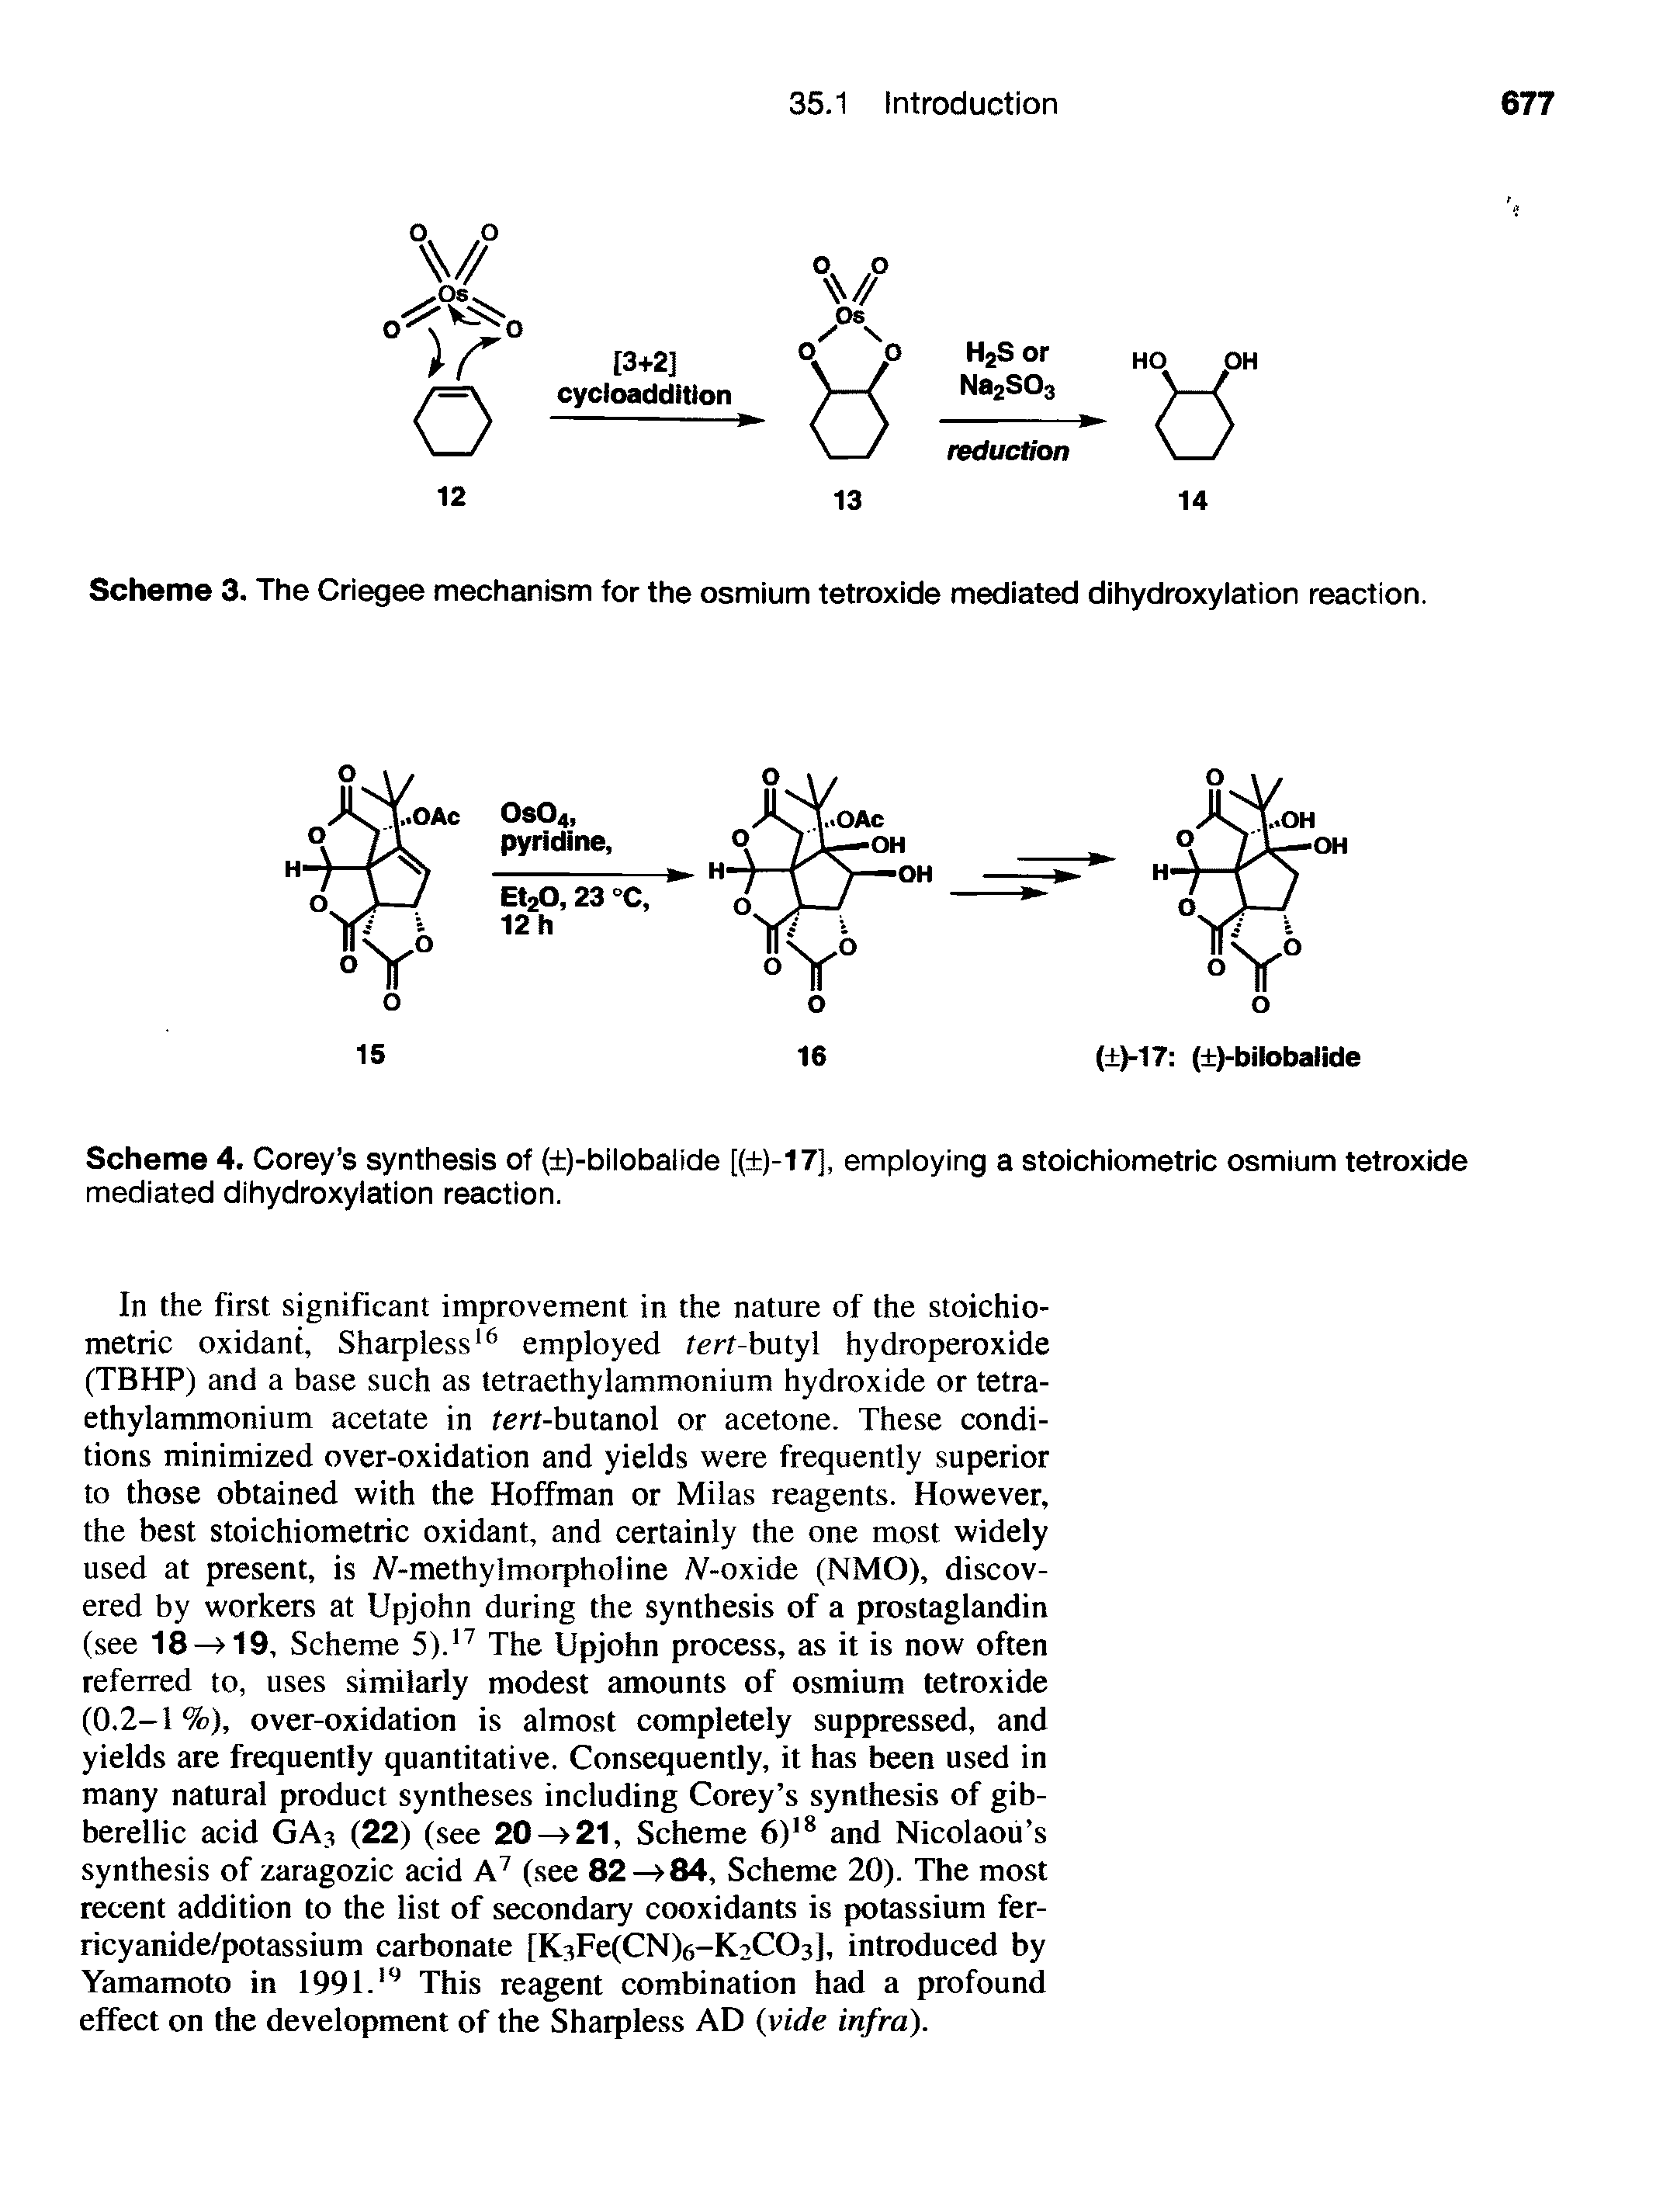 Scheme 3. The Criegee mechanism for the osmium tetroxide mediated dihydroxylation reaction.